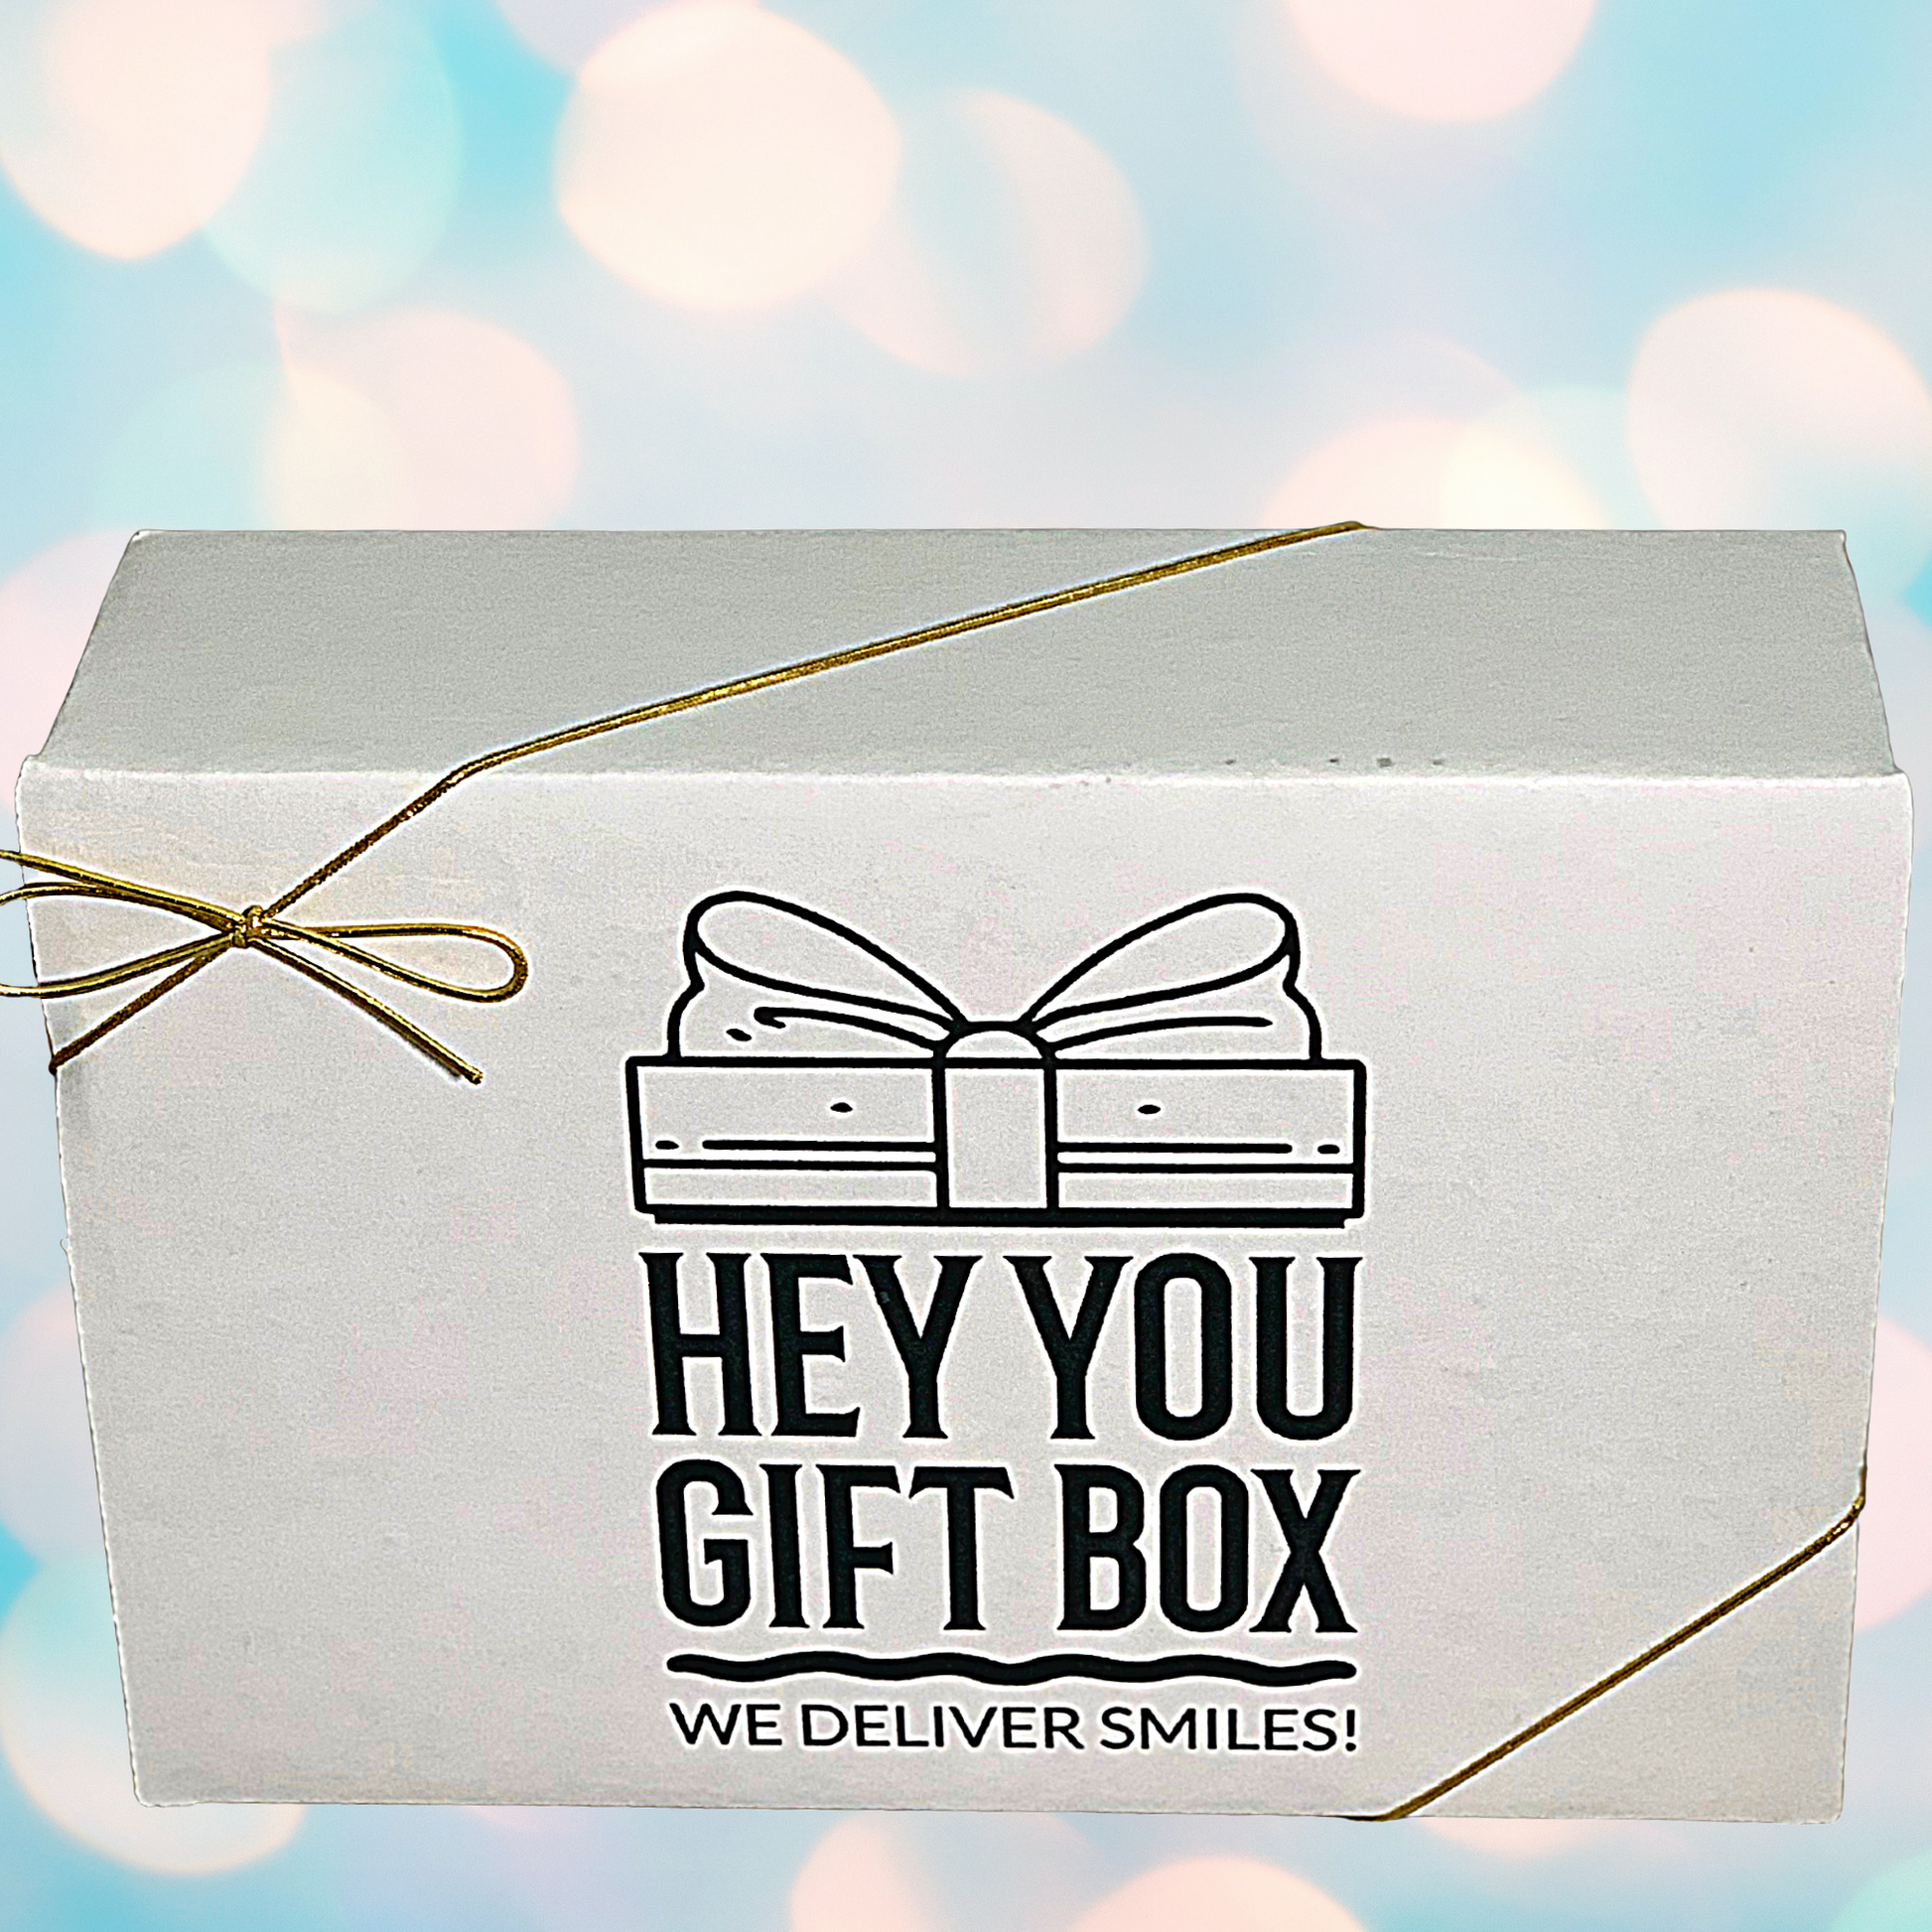 Cancer-Care-Gift-Box-Houston-Texas